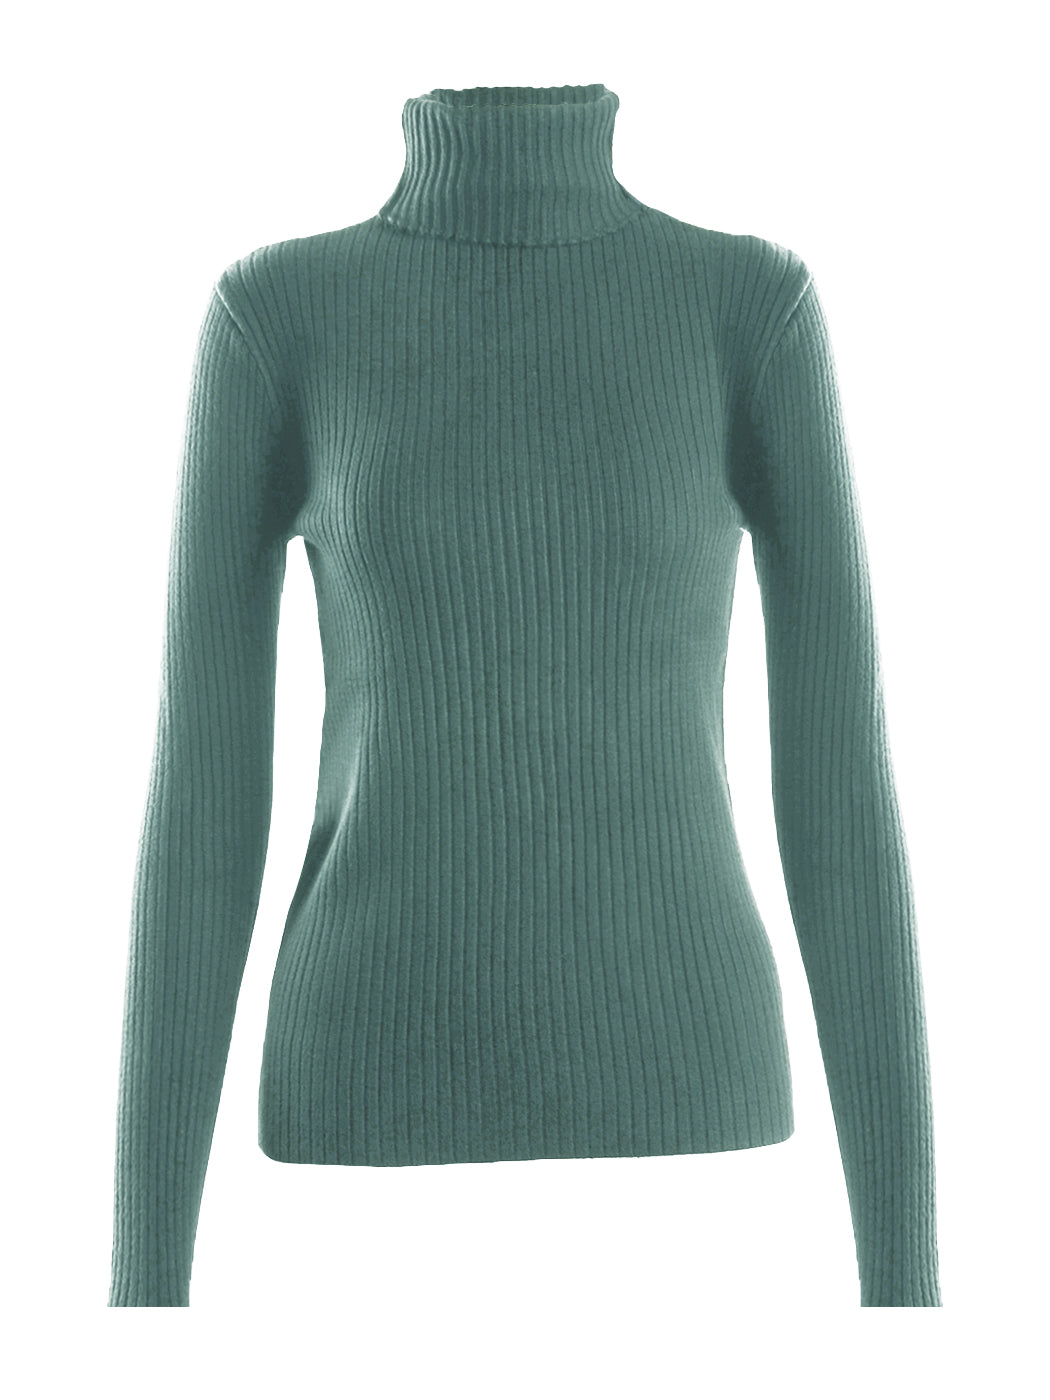 Classic Stretchable Lightweight Long Sleeve Slim Turtleneck Sweater